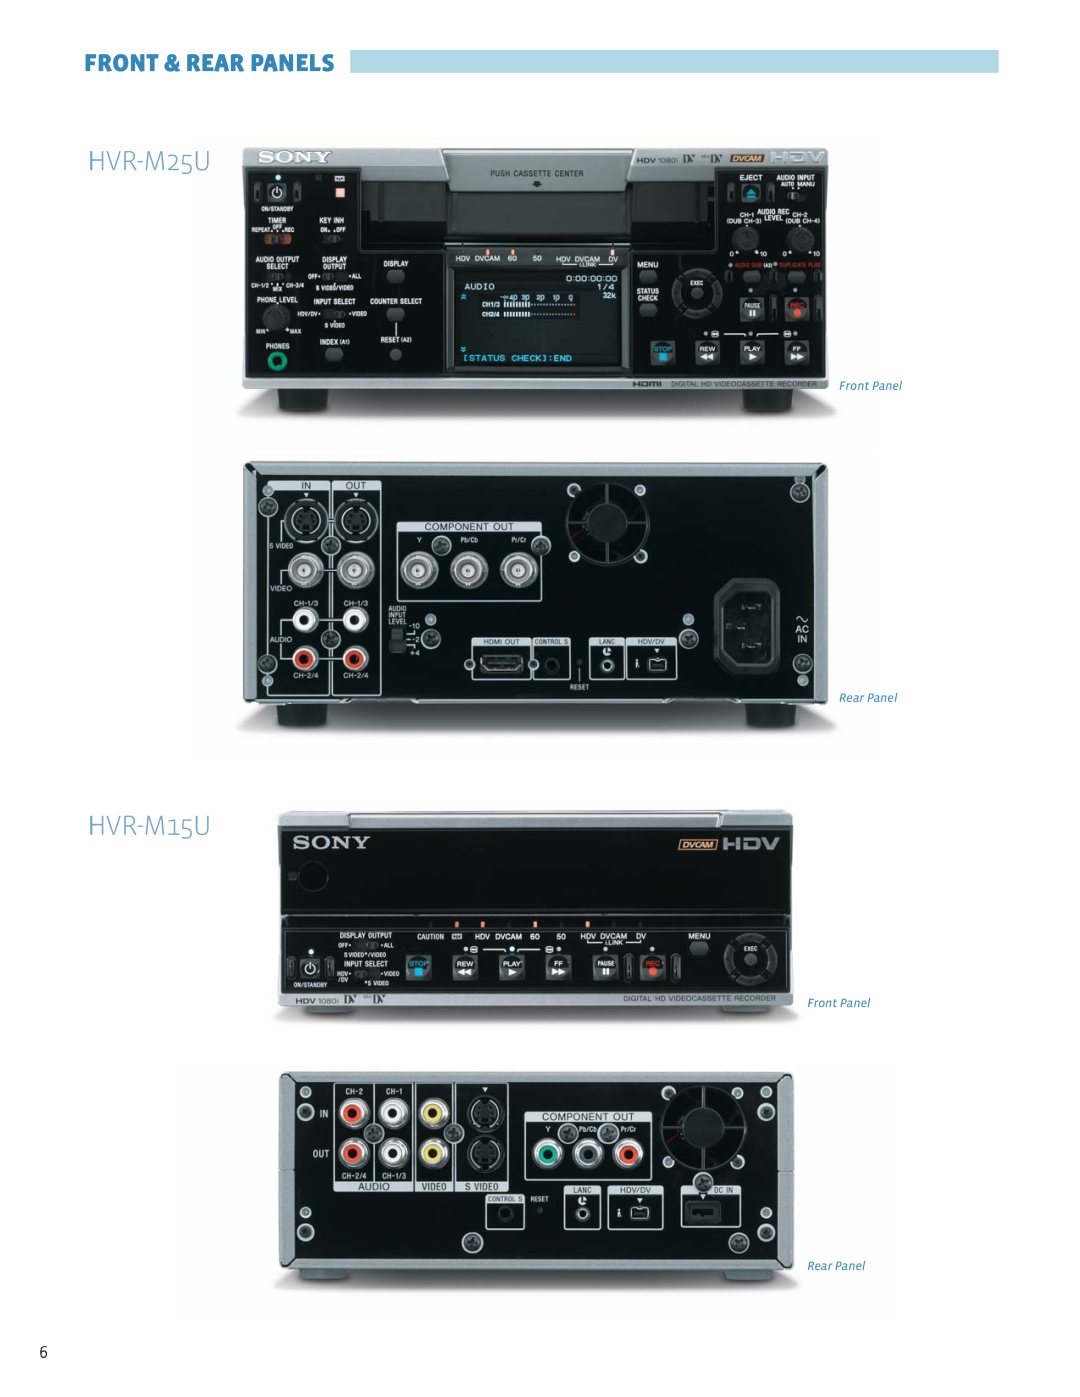 Sony HVR-M25U manual Front & Rear Panels, HVR-M15U, Front Panel Rear Panel 